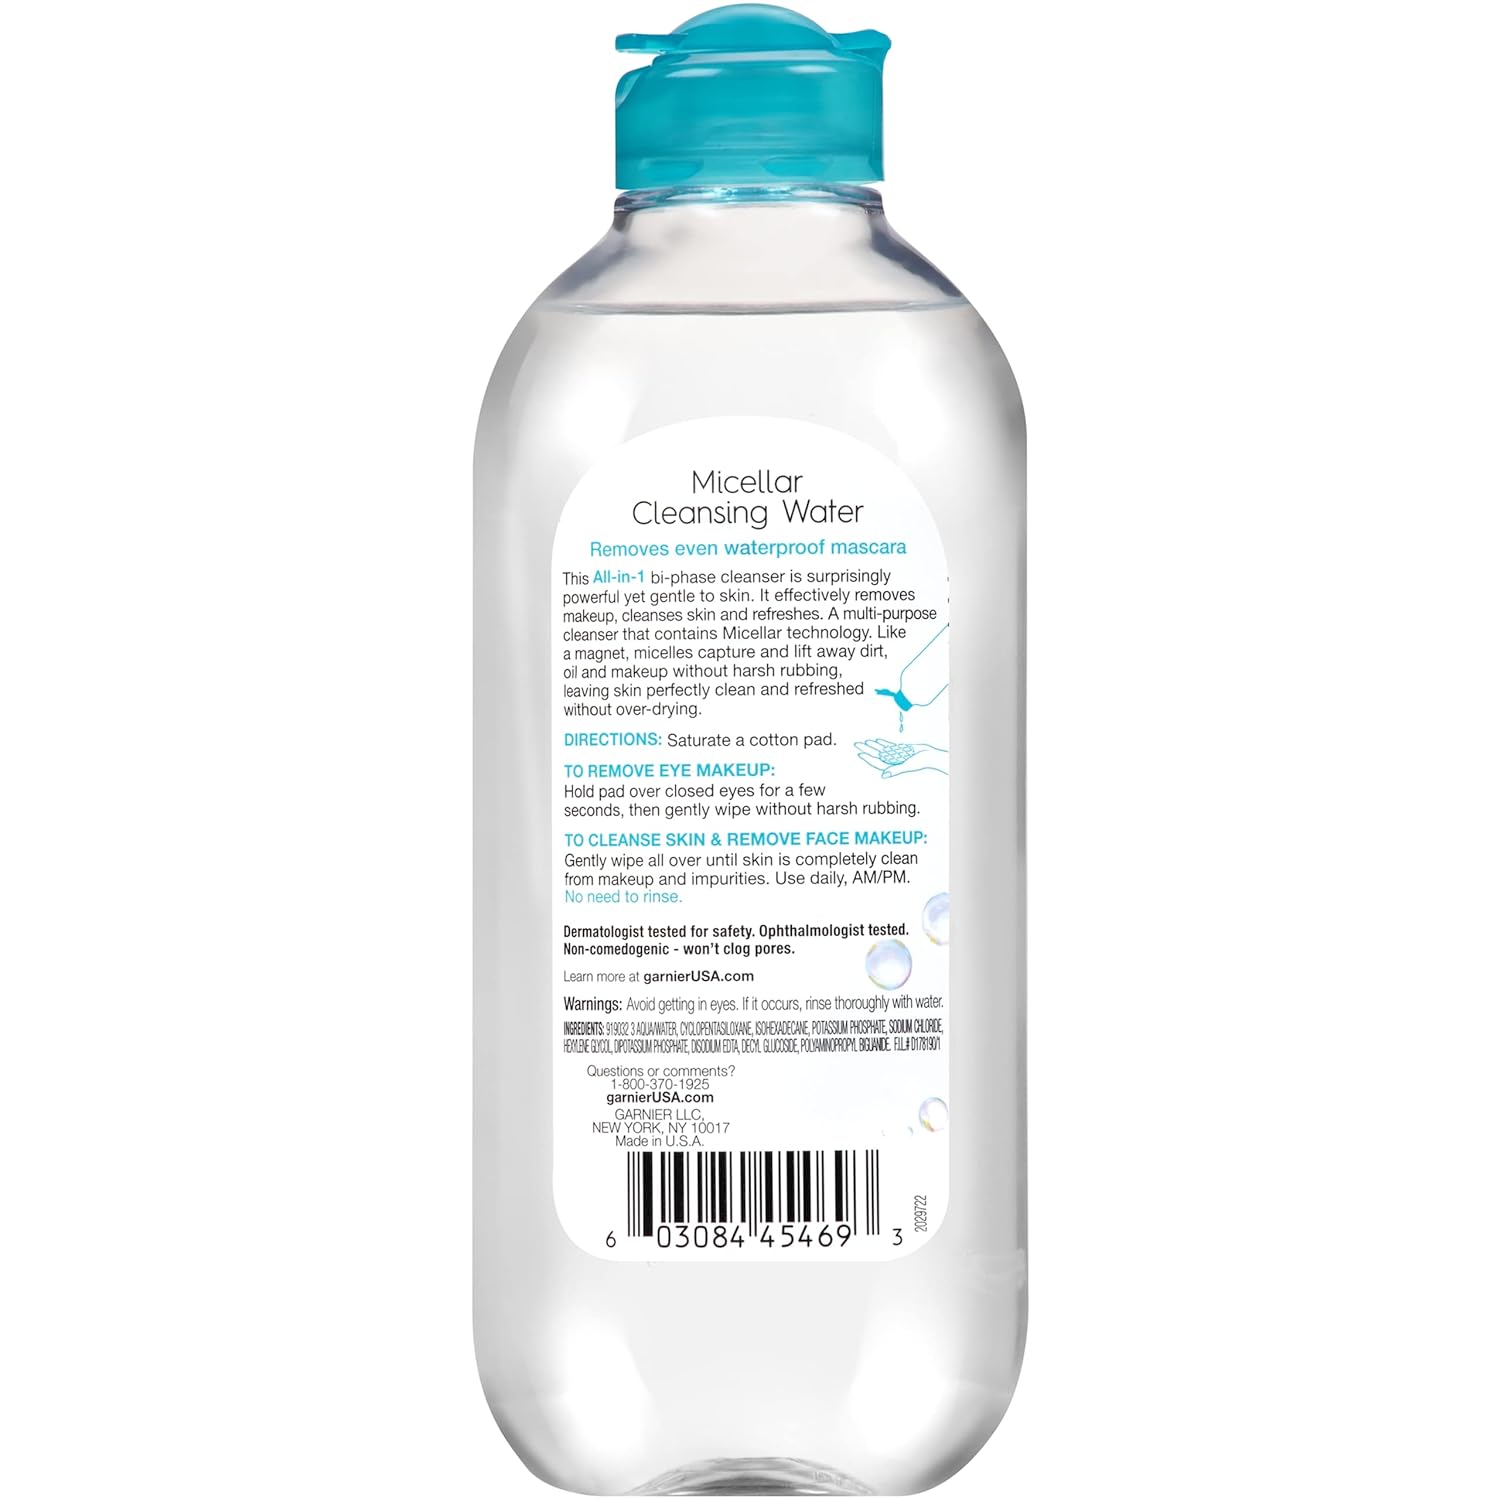 Garnier SkinActive Micellar Water For Waterproof Makeup, Facial Cleanser & Makeup Remover, 13.5 Fl Oz (400mL), 1 Count (Packaging May Vary)